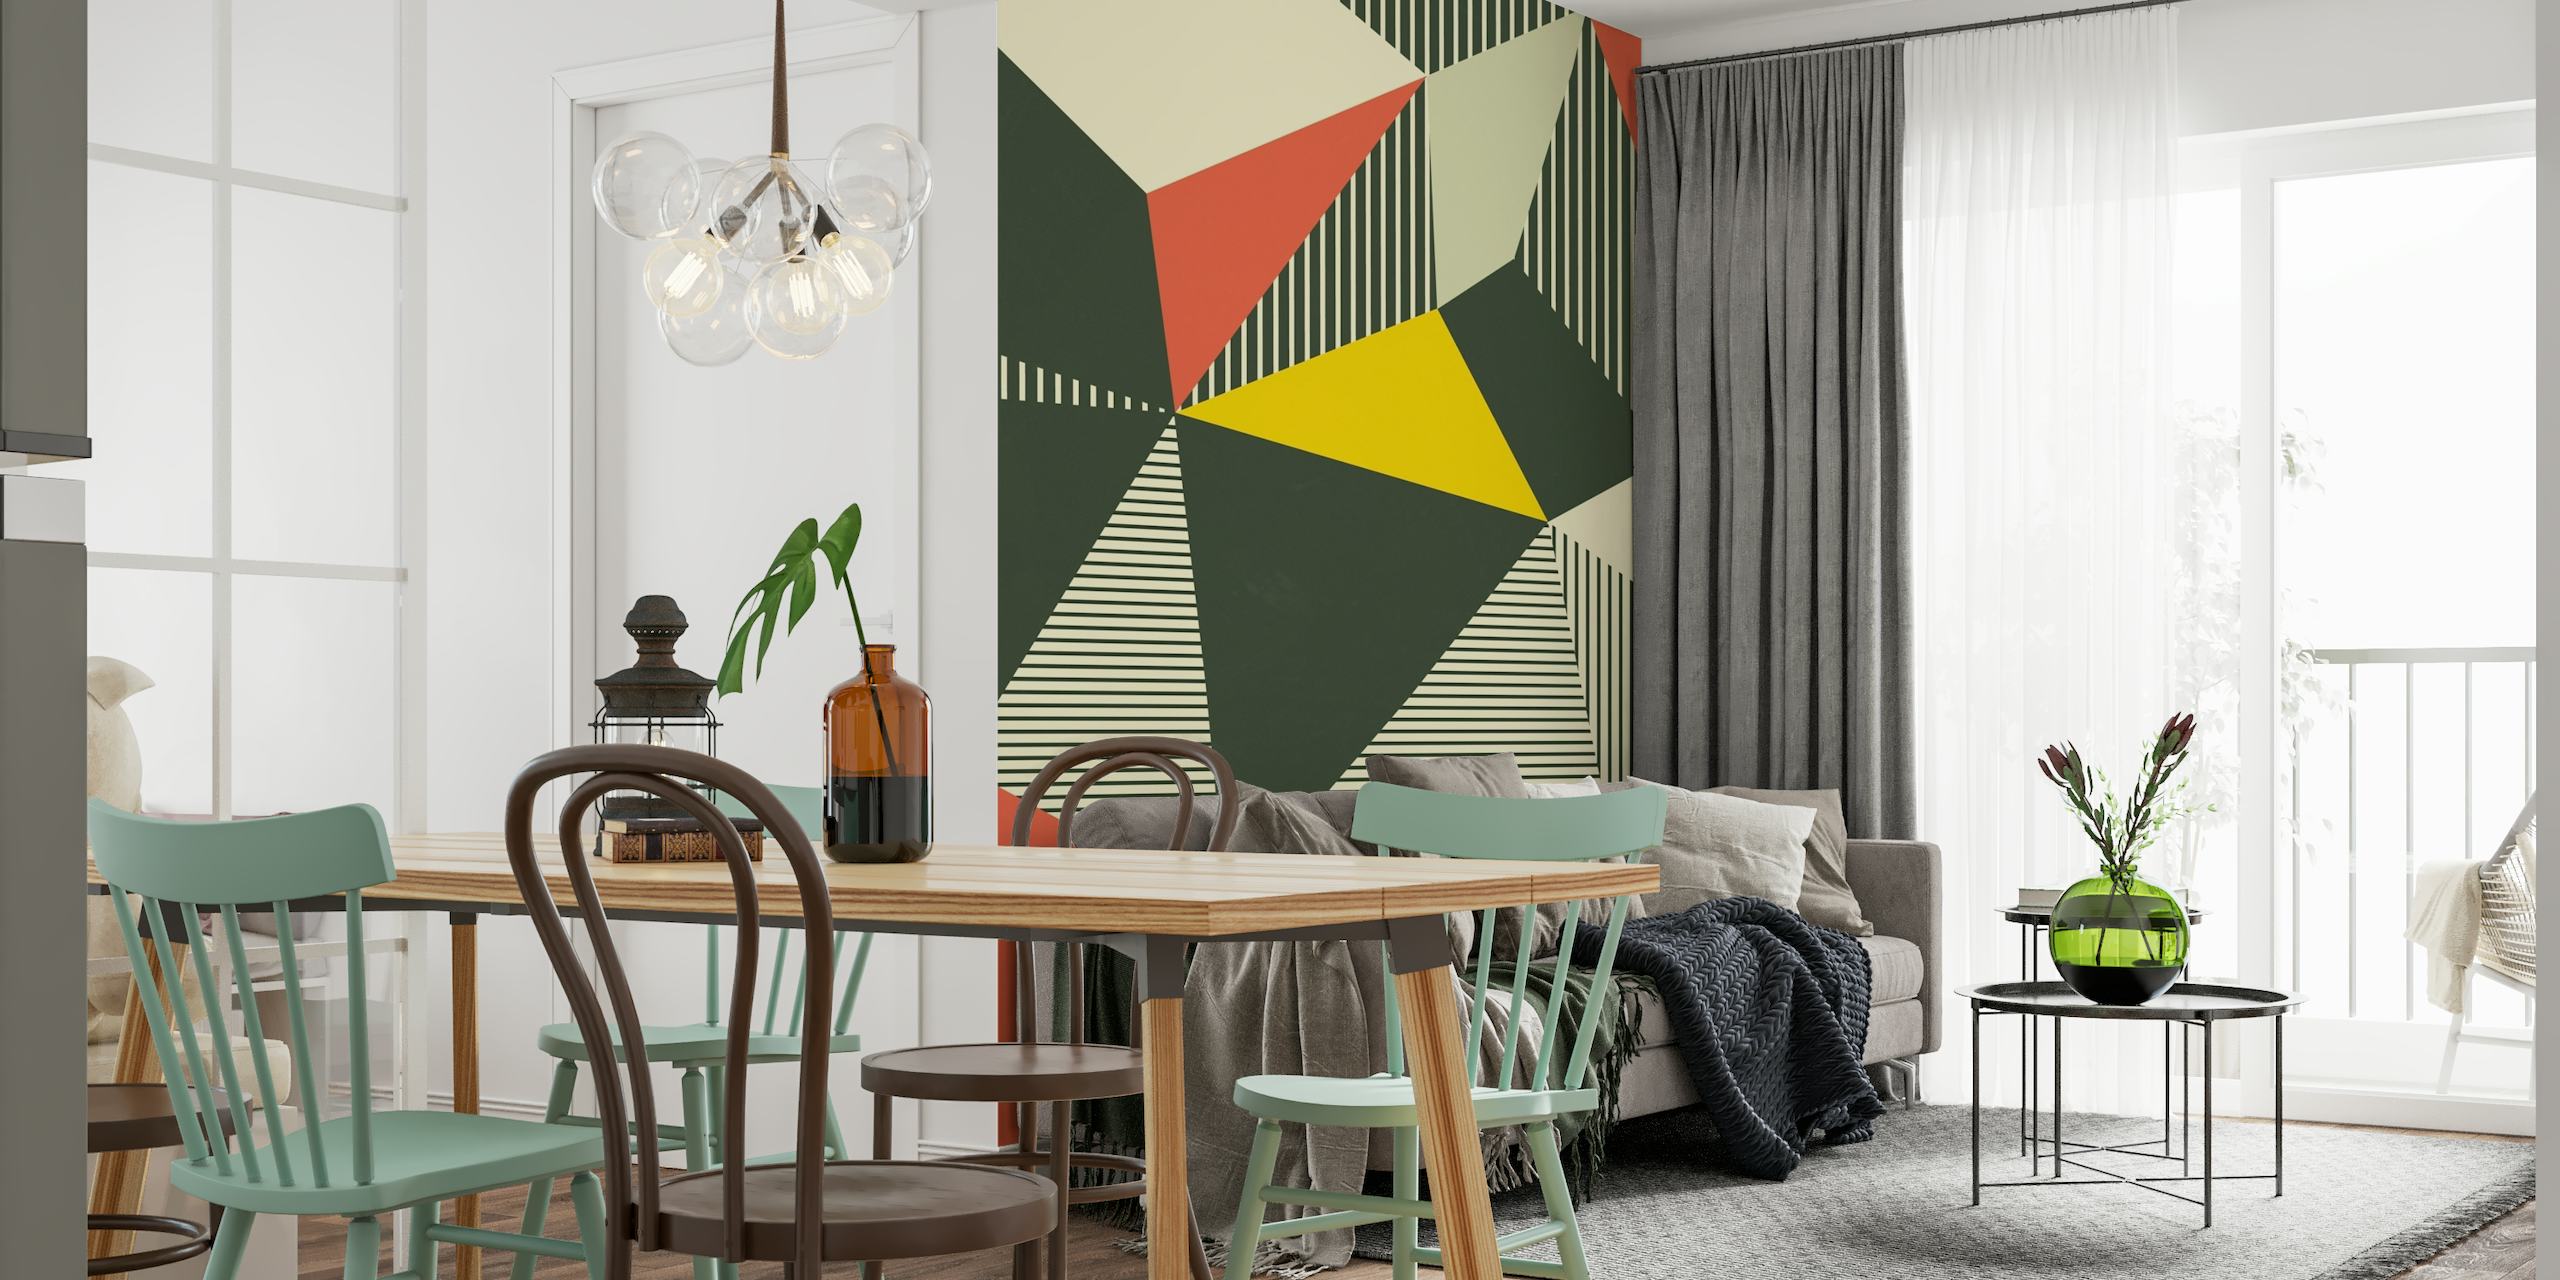 High quality geometric bauhaus wallpaper